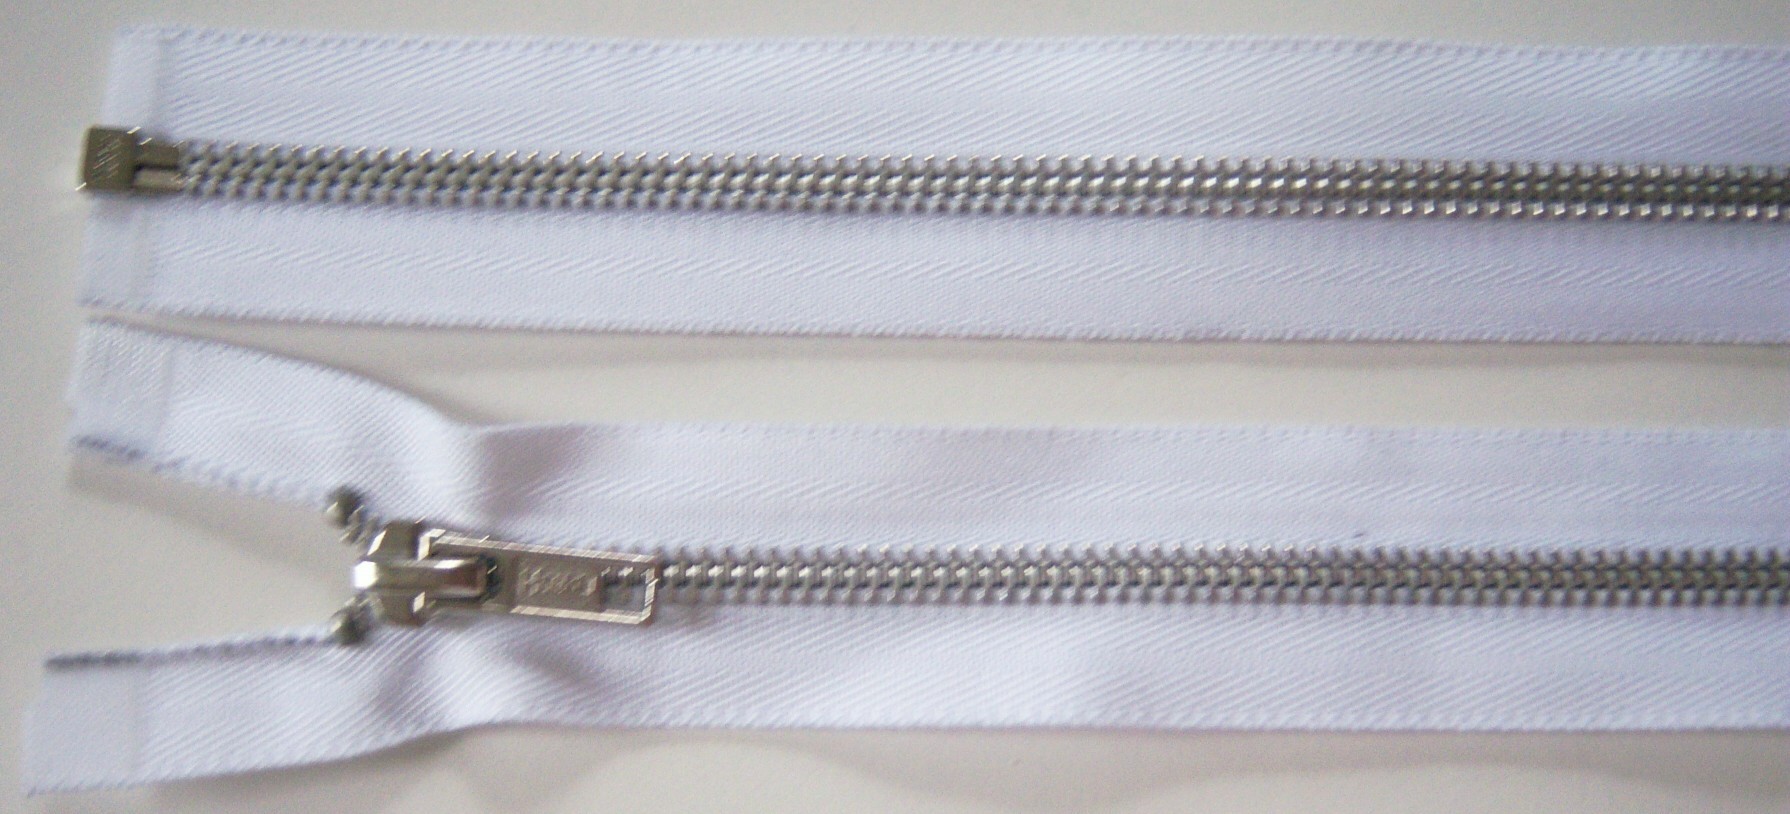 White Ideal 30" Metal Separating Zipper